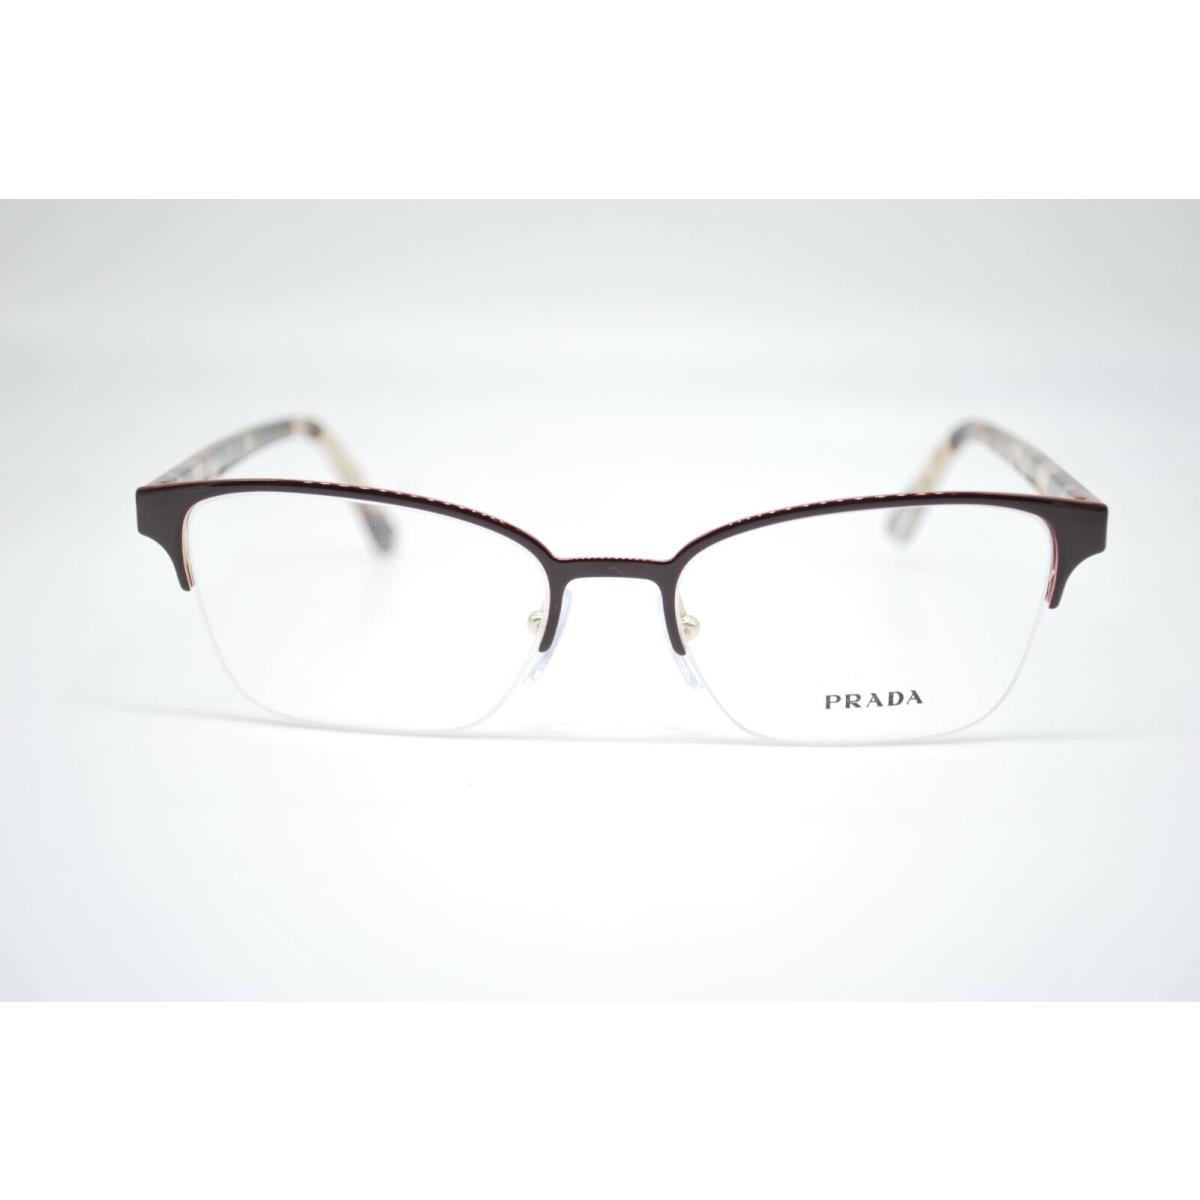 Prada eyeglasses VPR - TOP BORDEAUX/PALE GOLD Frame 1